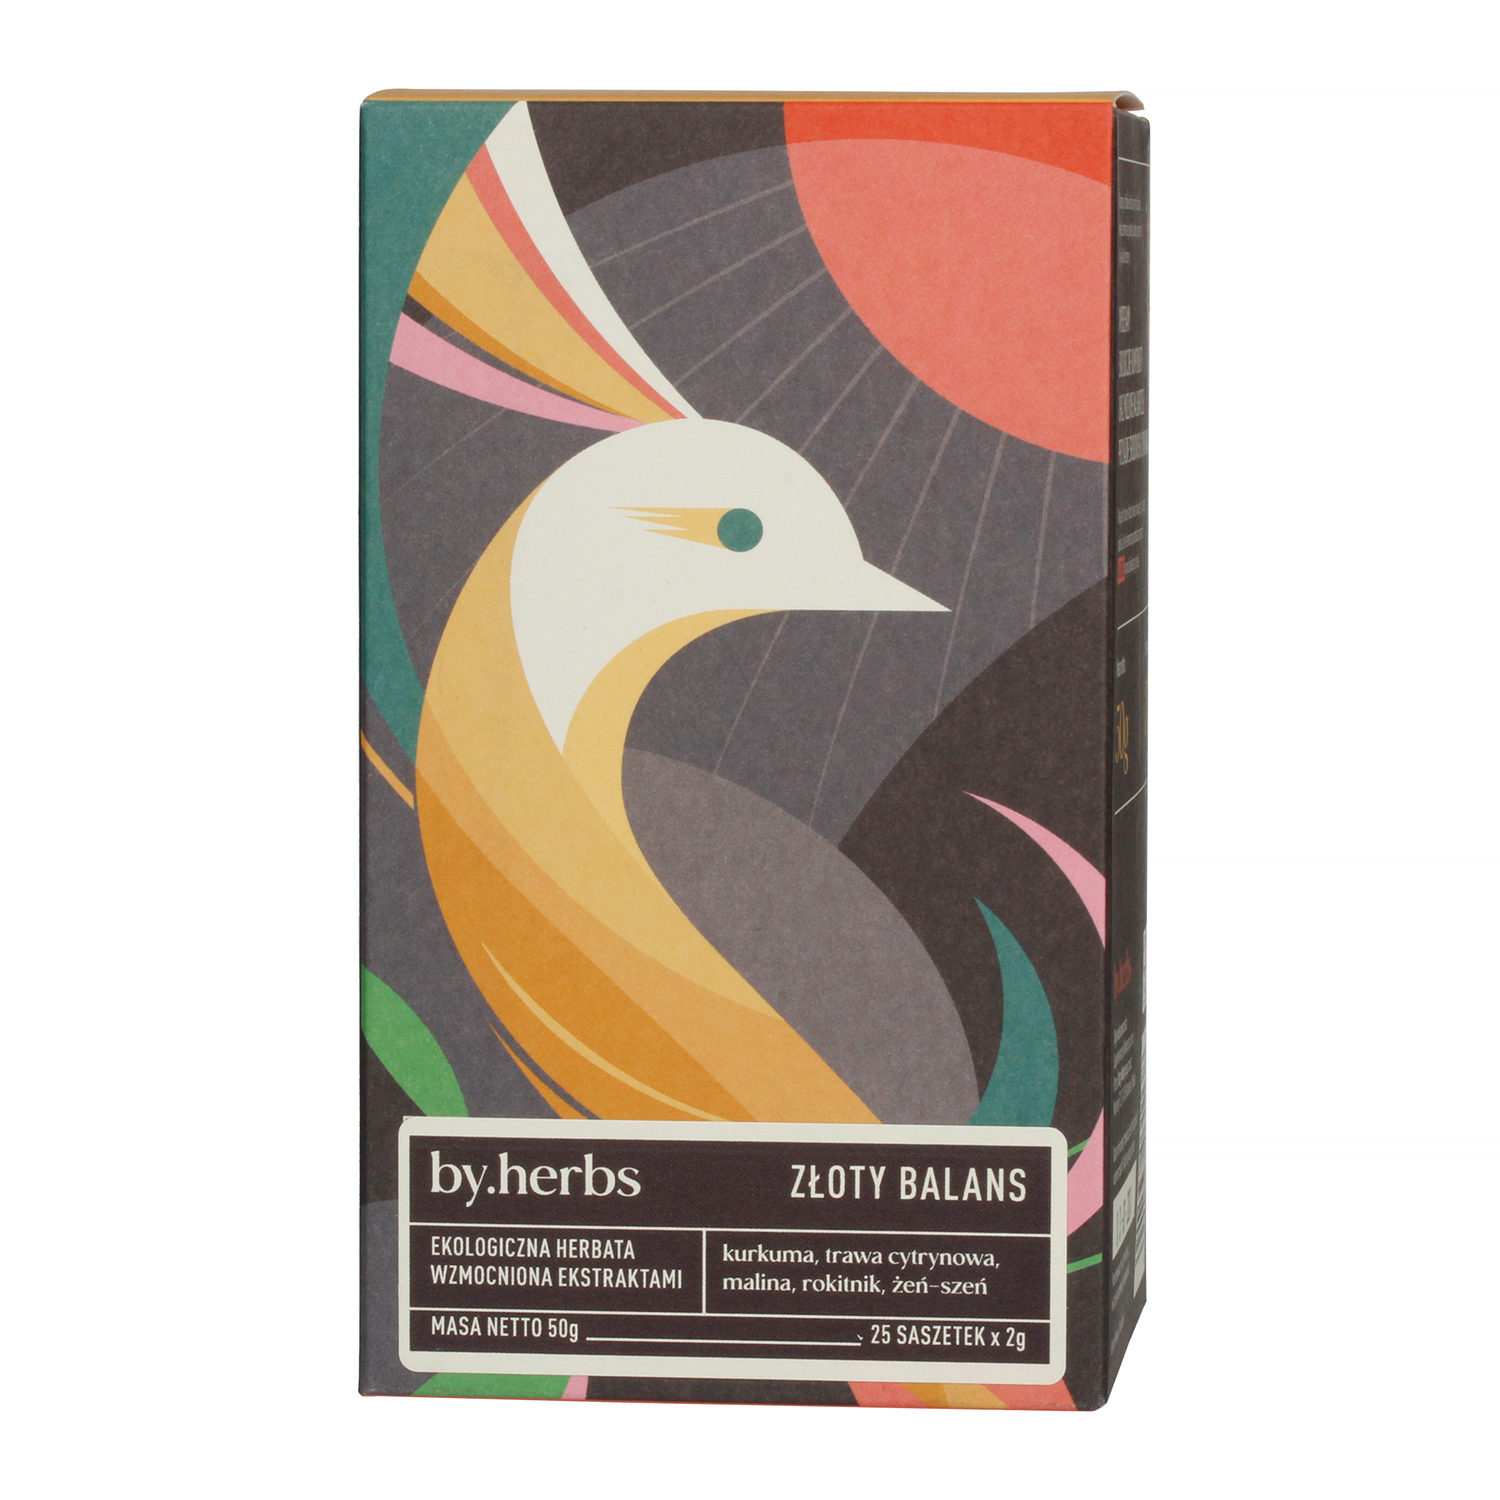 By.herbs - Złoty Balans - Herbal Infusion - 25 Tea Bags